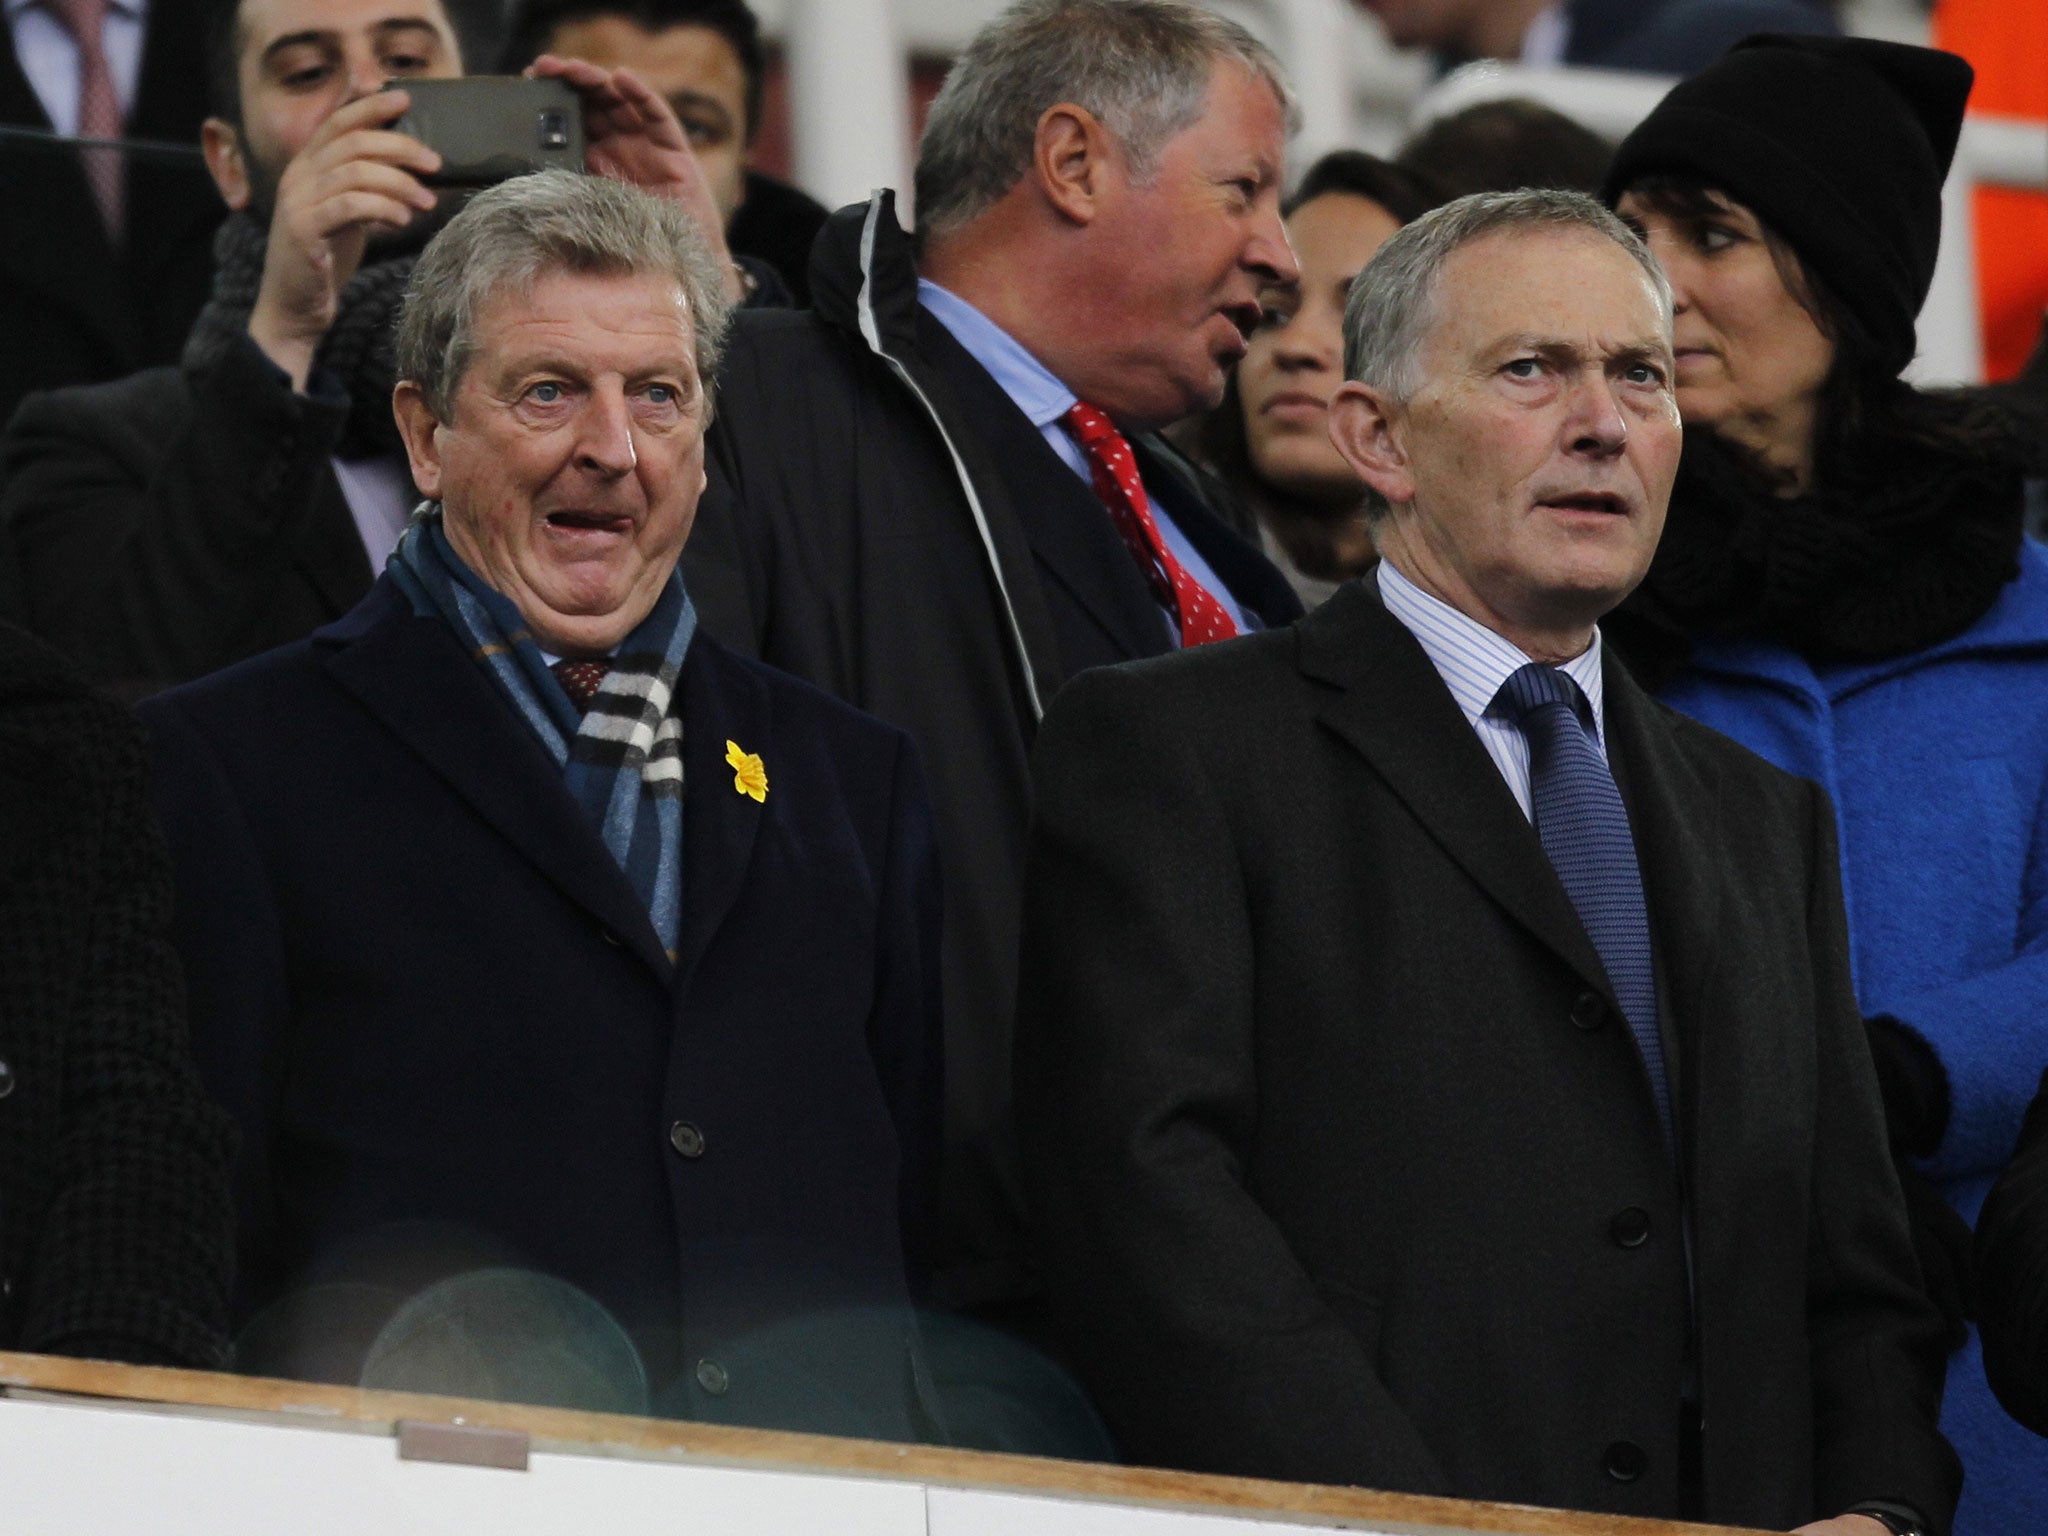 England manager Roy Hodgson alongside Premier League chief executive Richard Scudamore